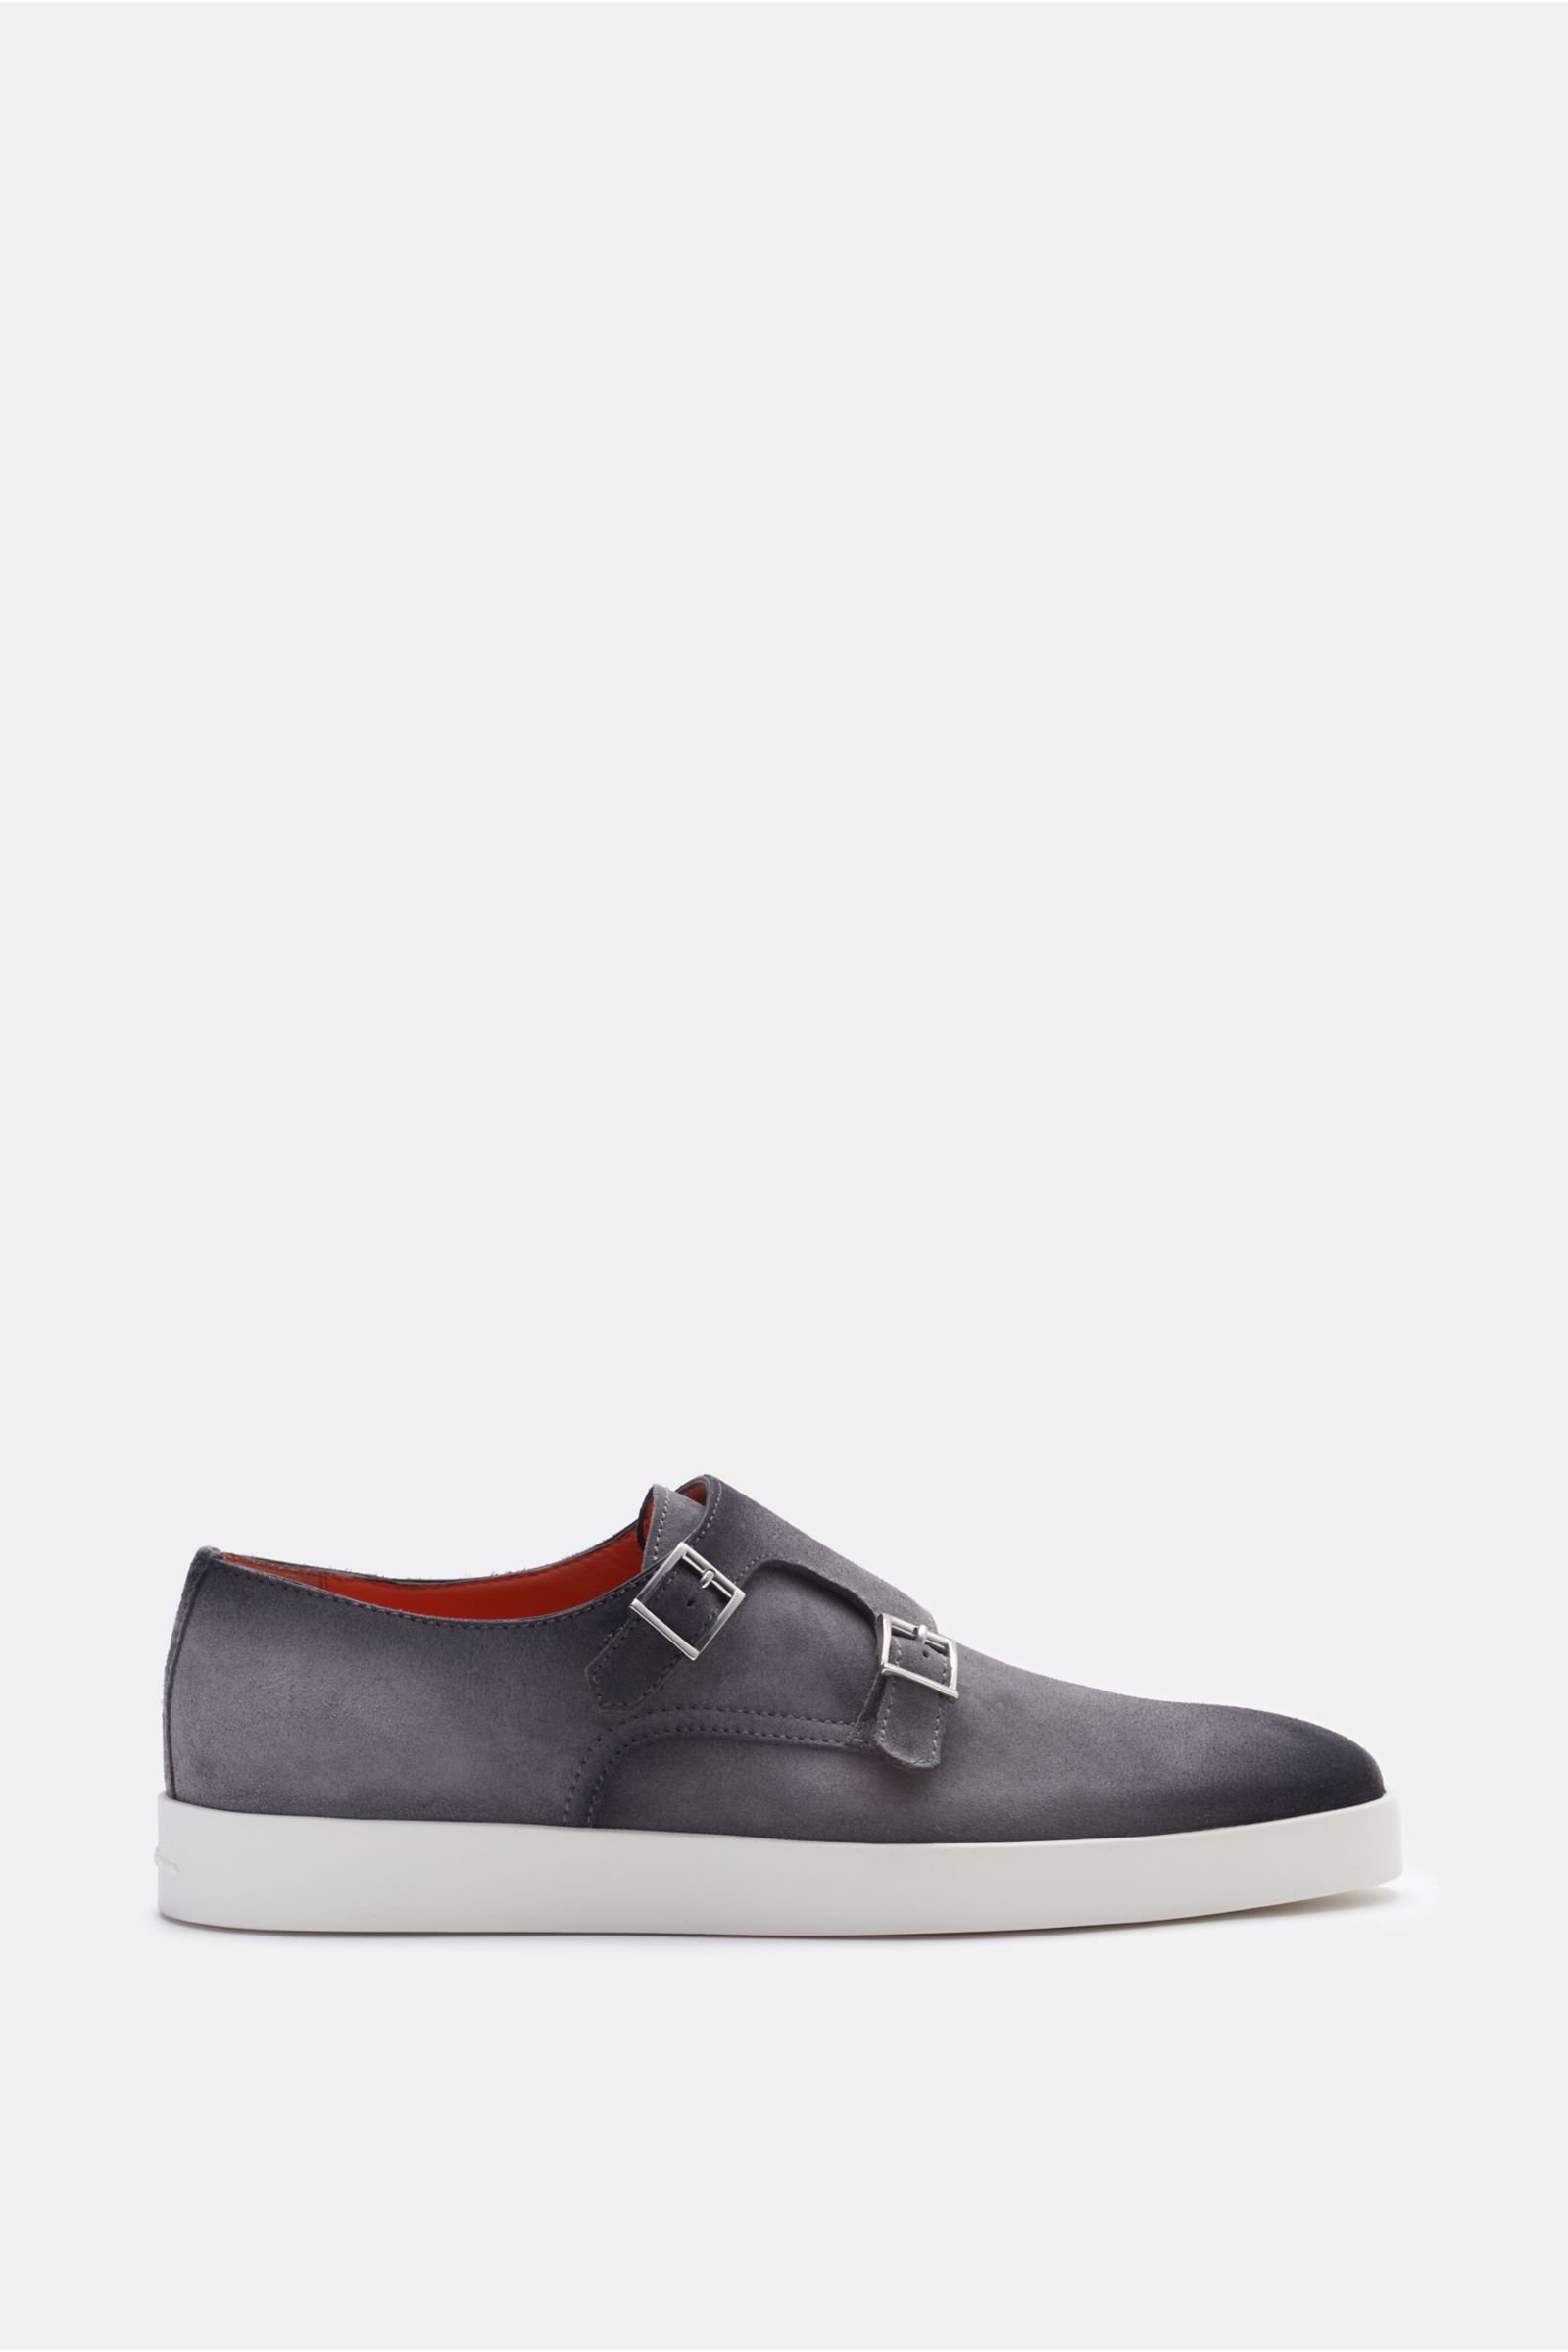 Double monk shoes dark grey